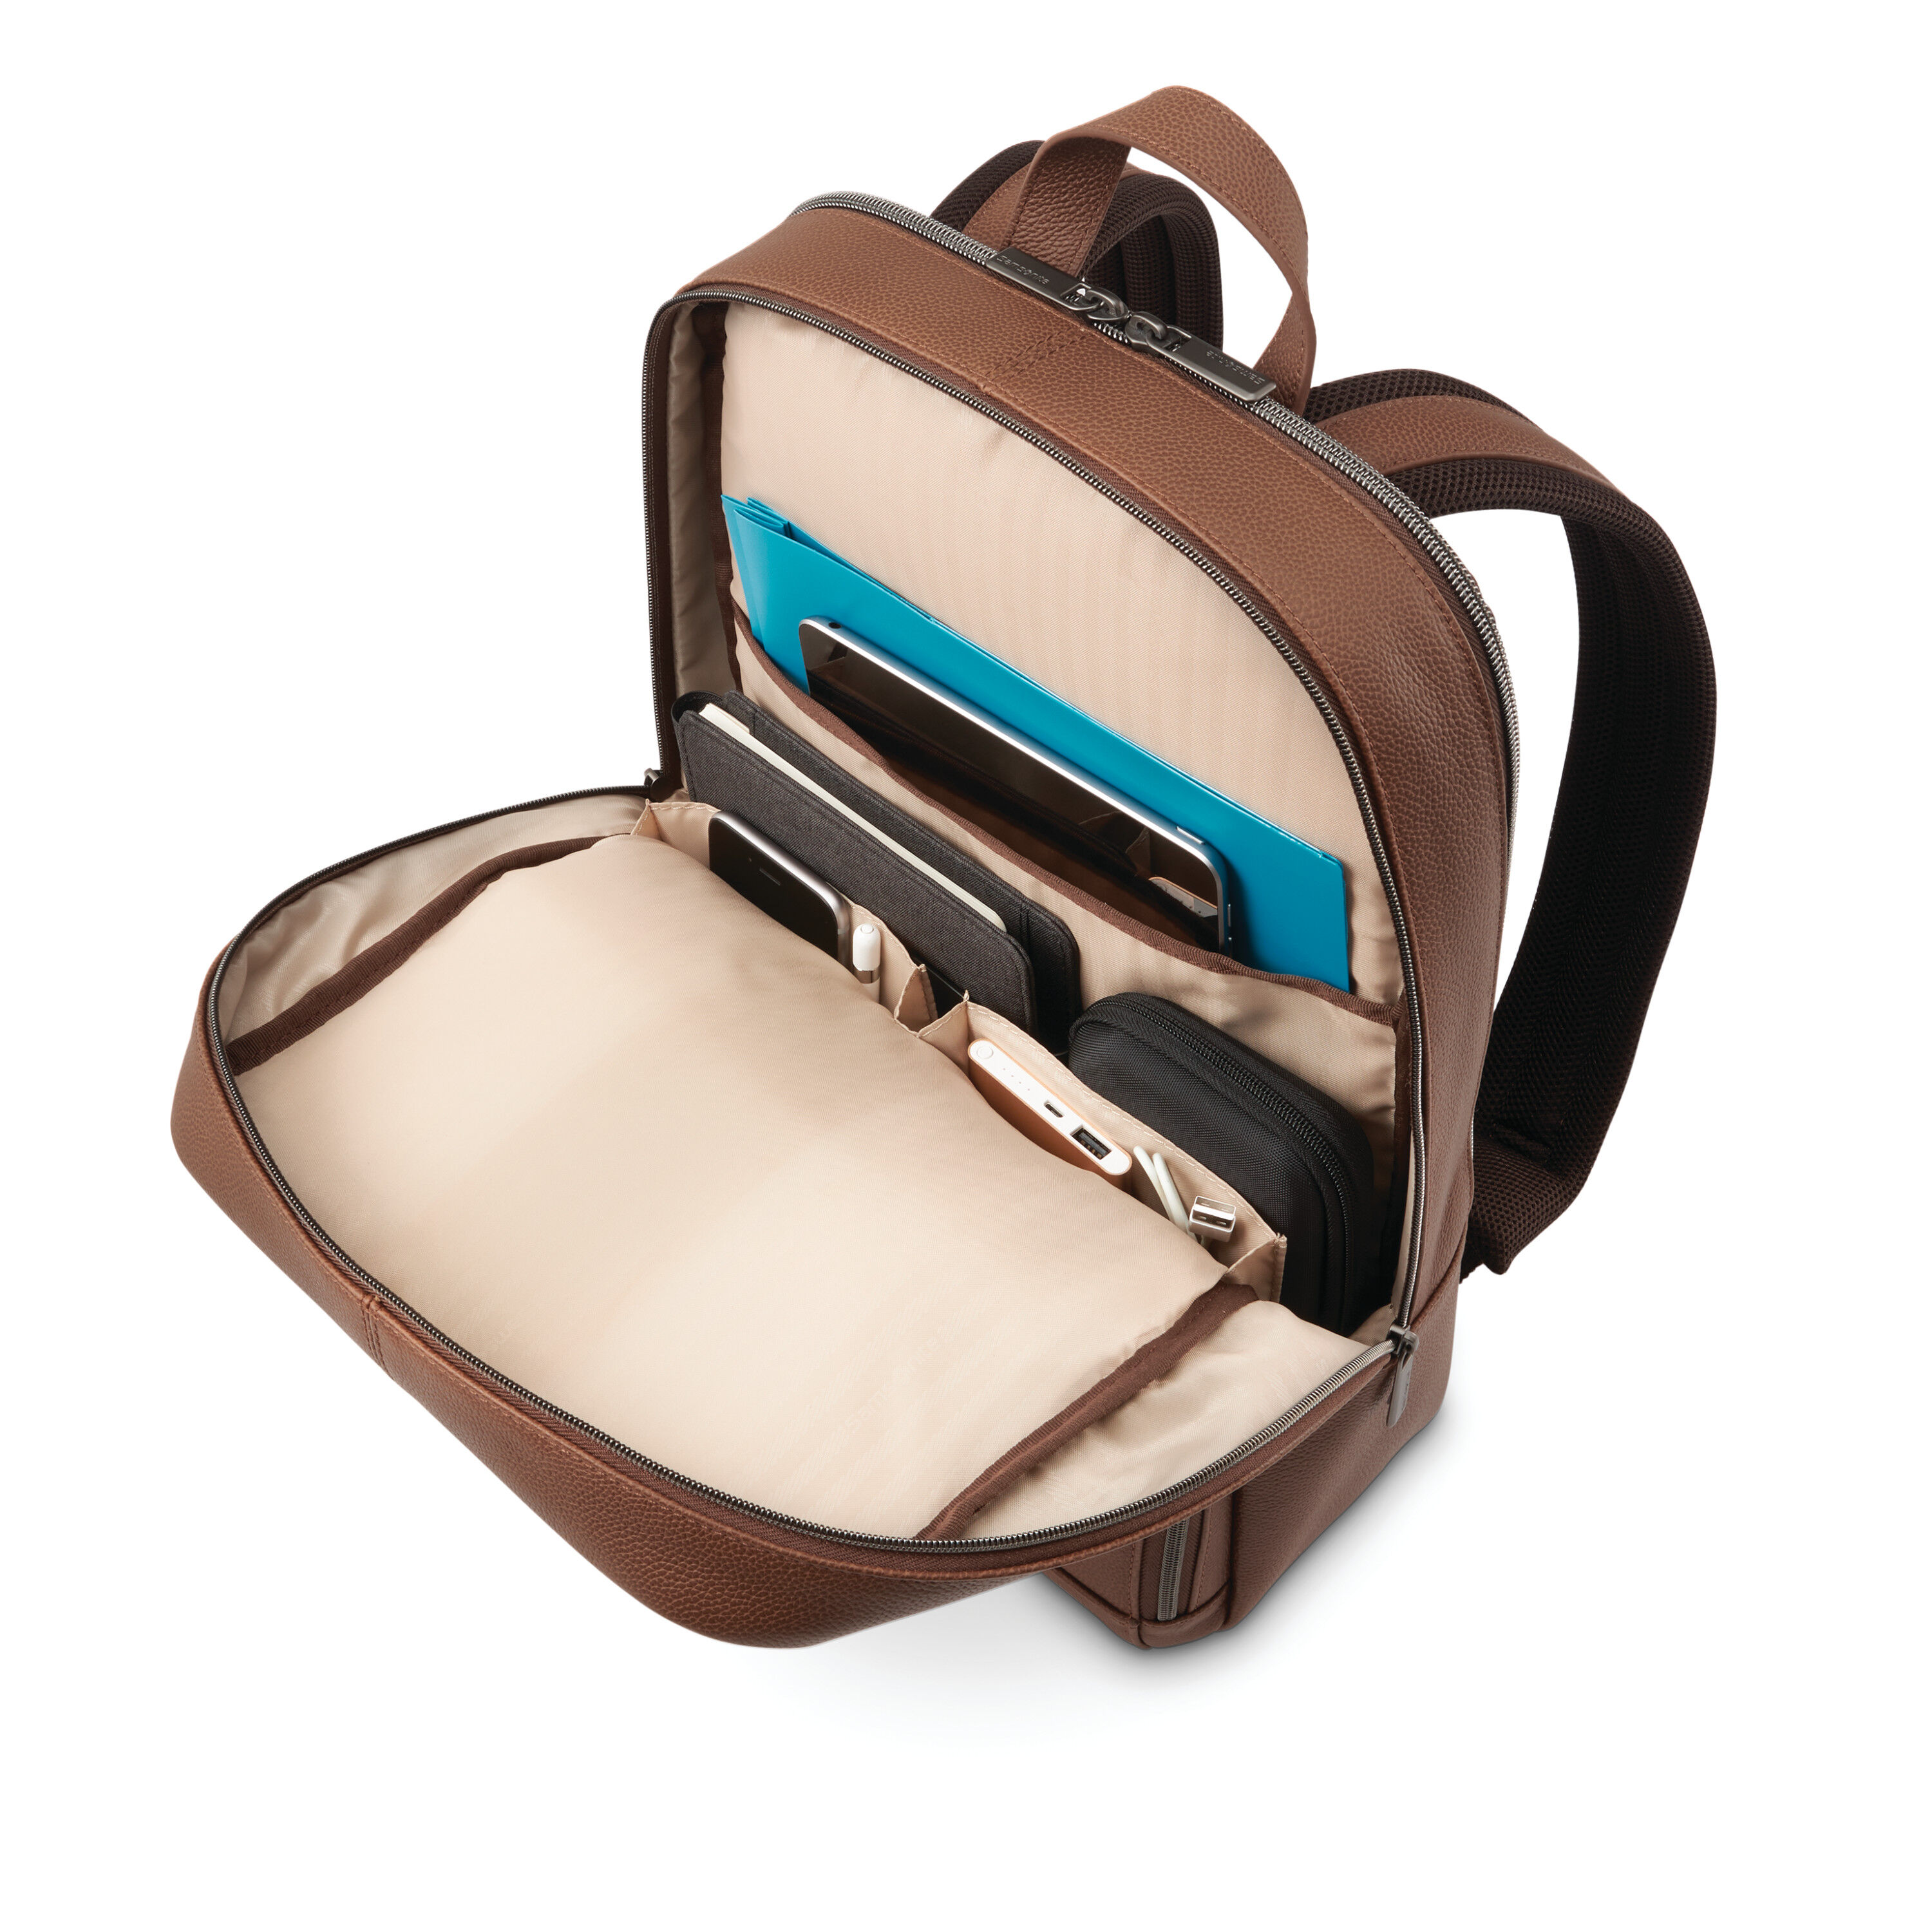 Buy Business Slim Leather Backpack for USD 99.99 | Samsonite US